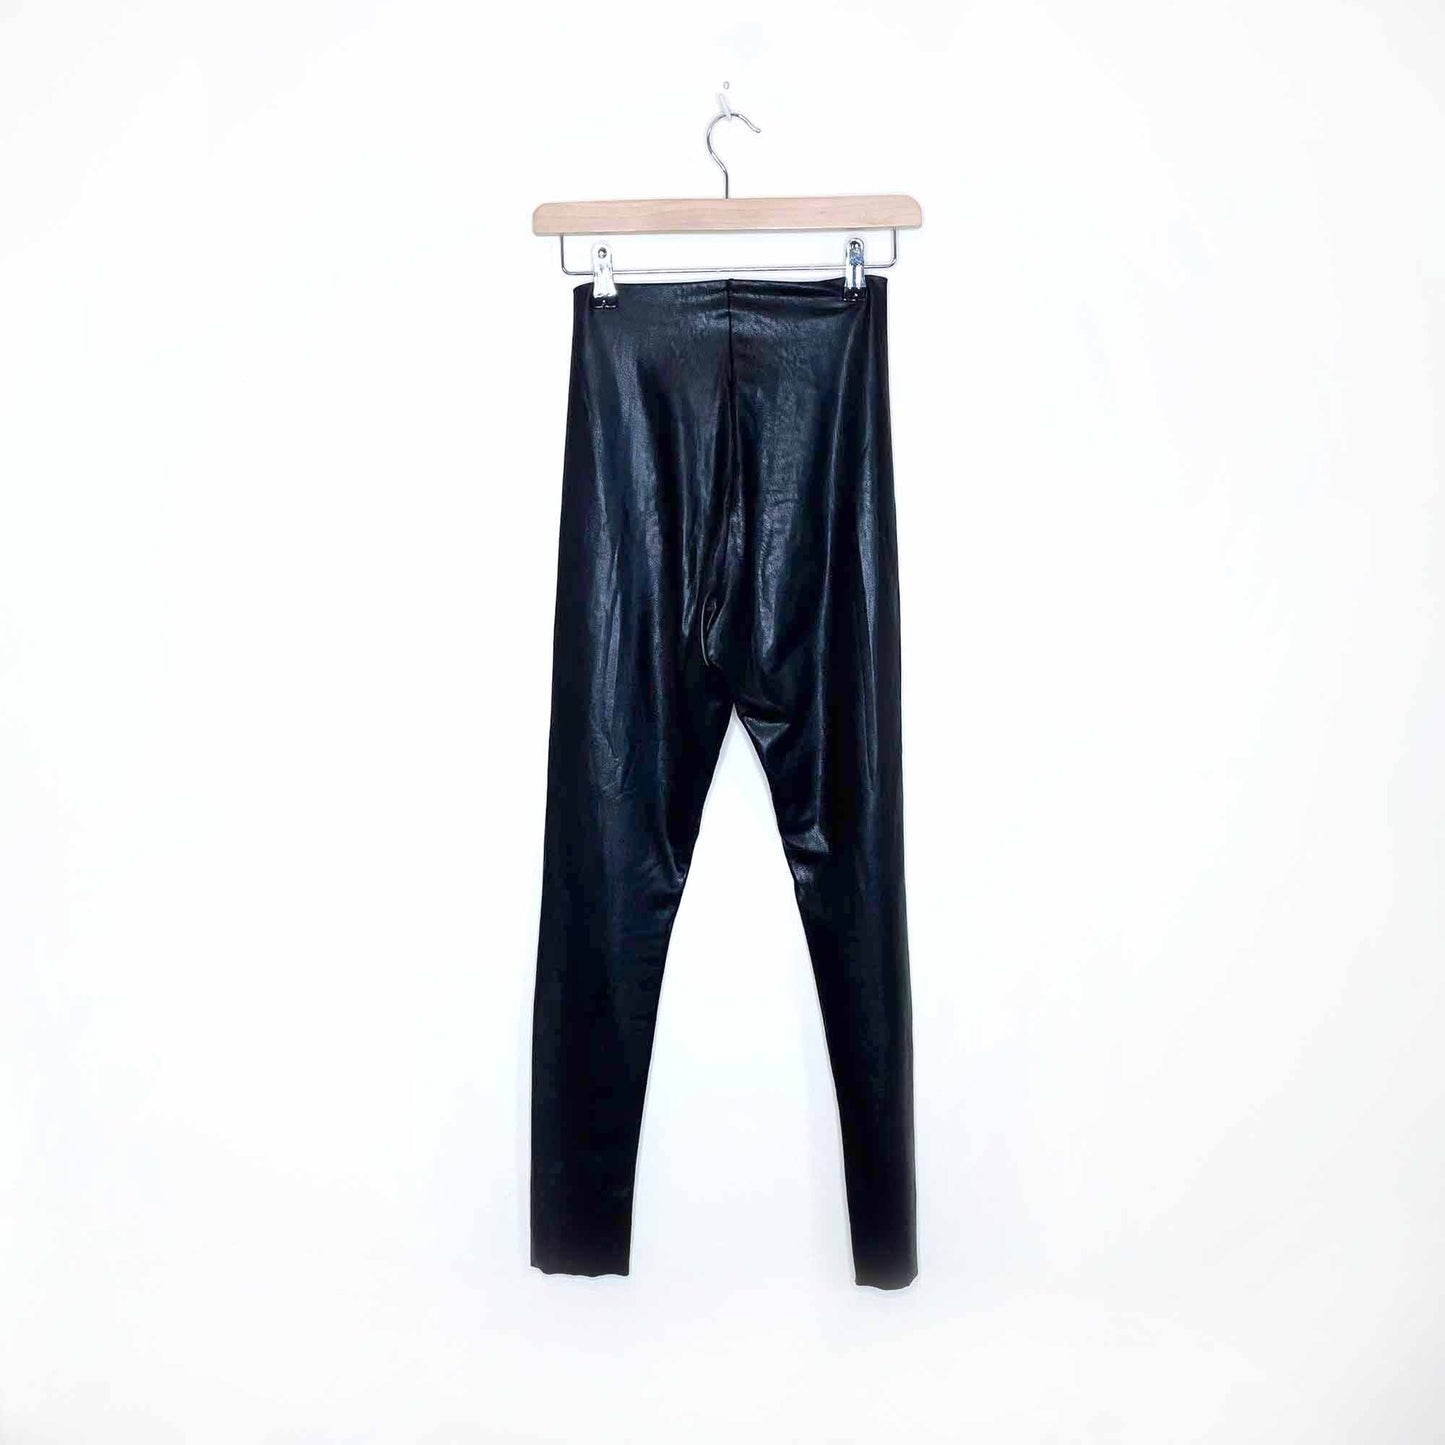 commando 7/8 faux leather high rise legging - size medium